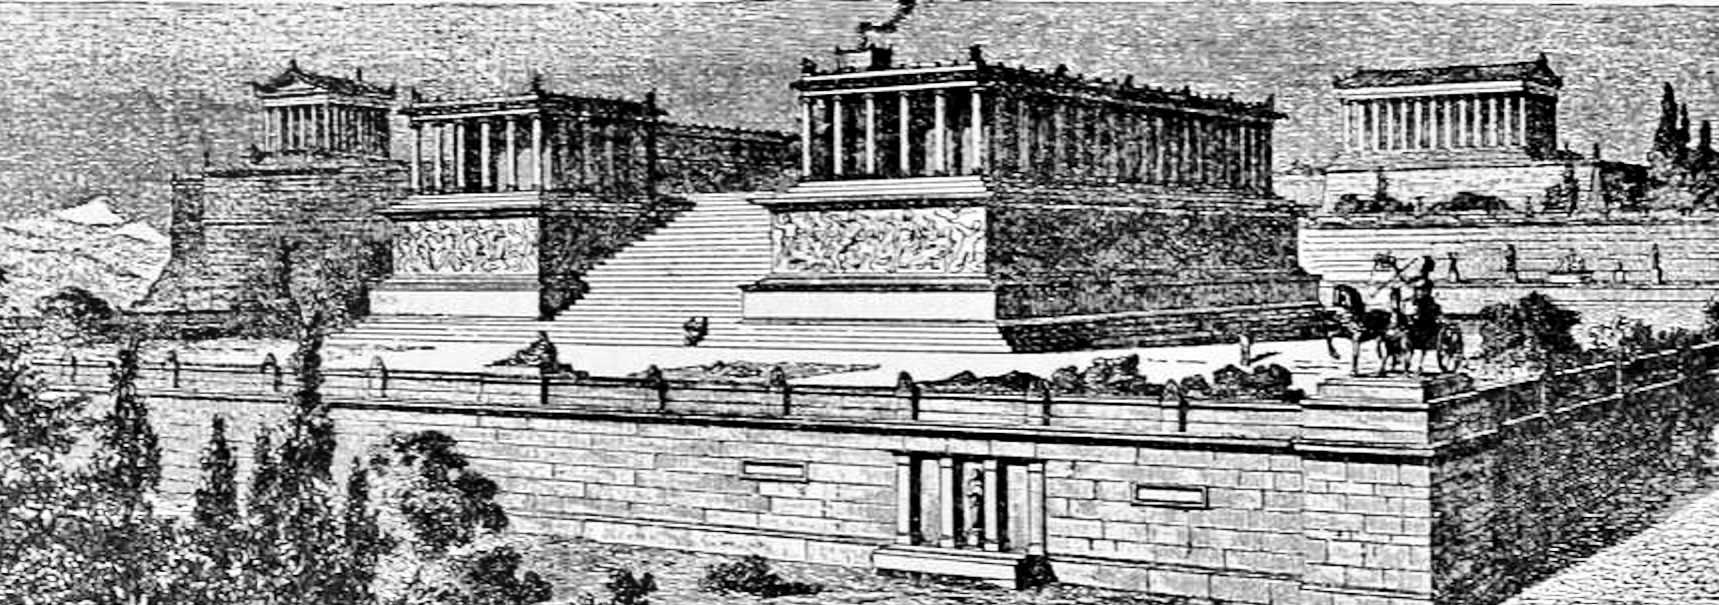 The Temples of Pergamon